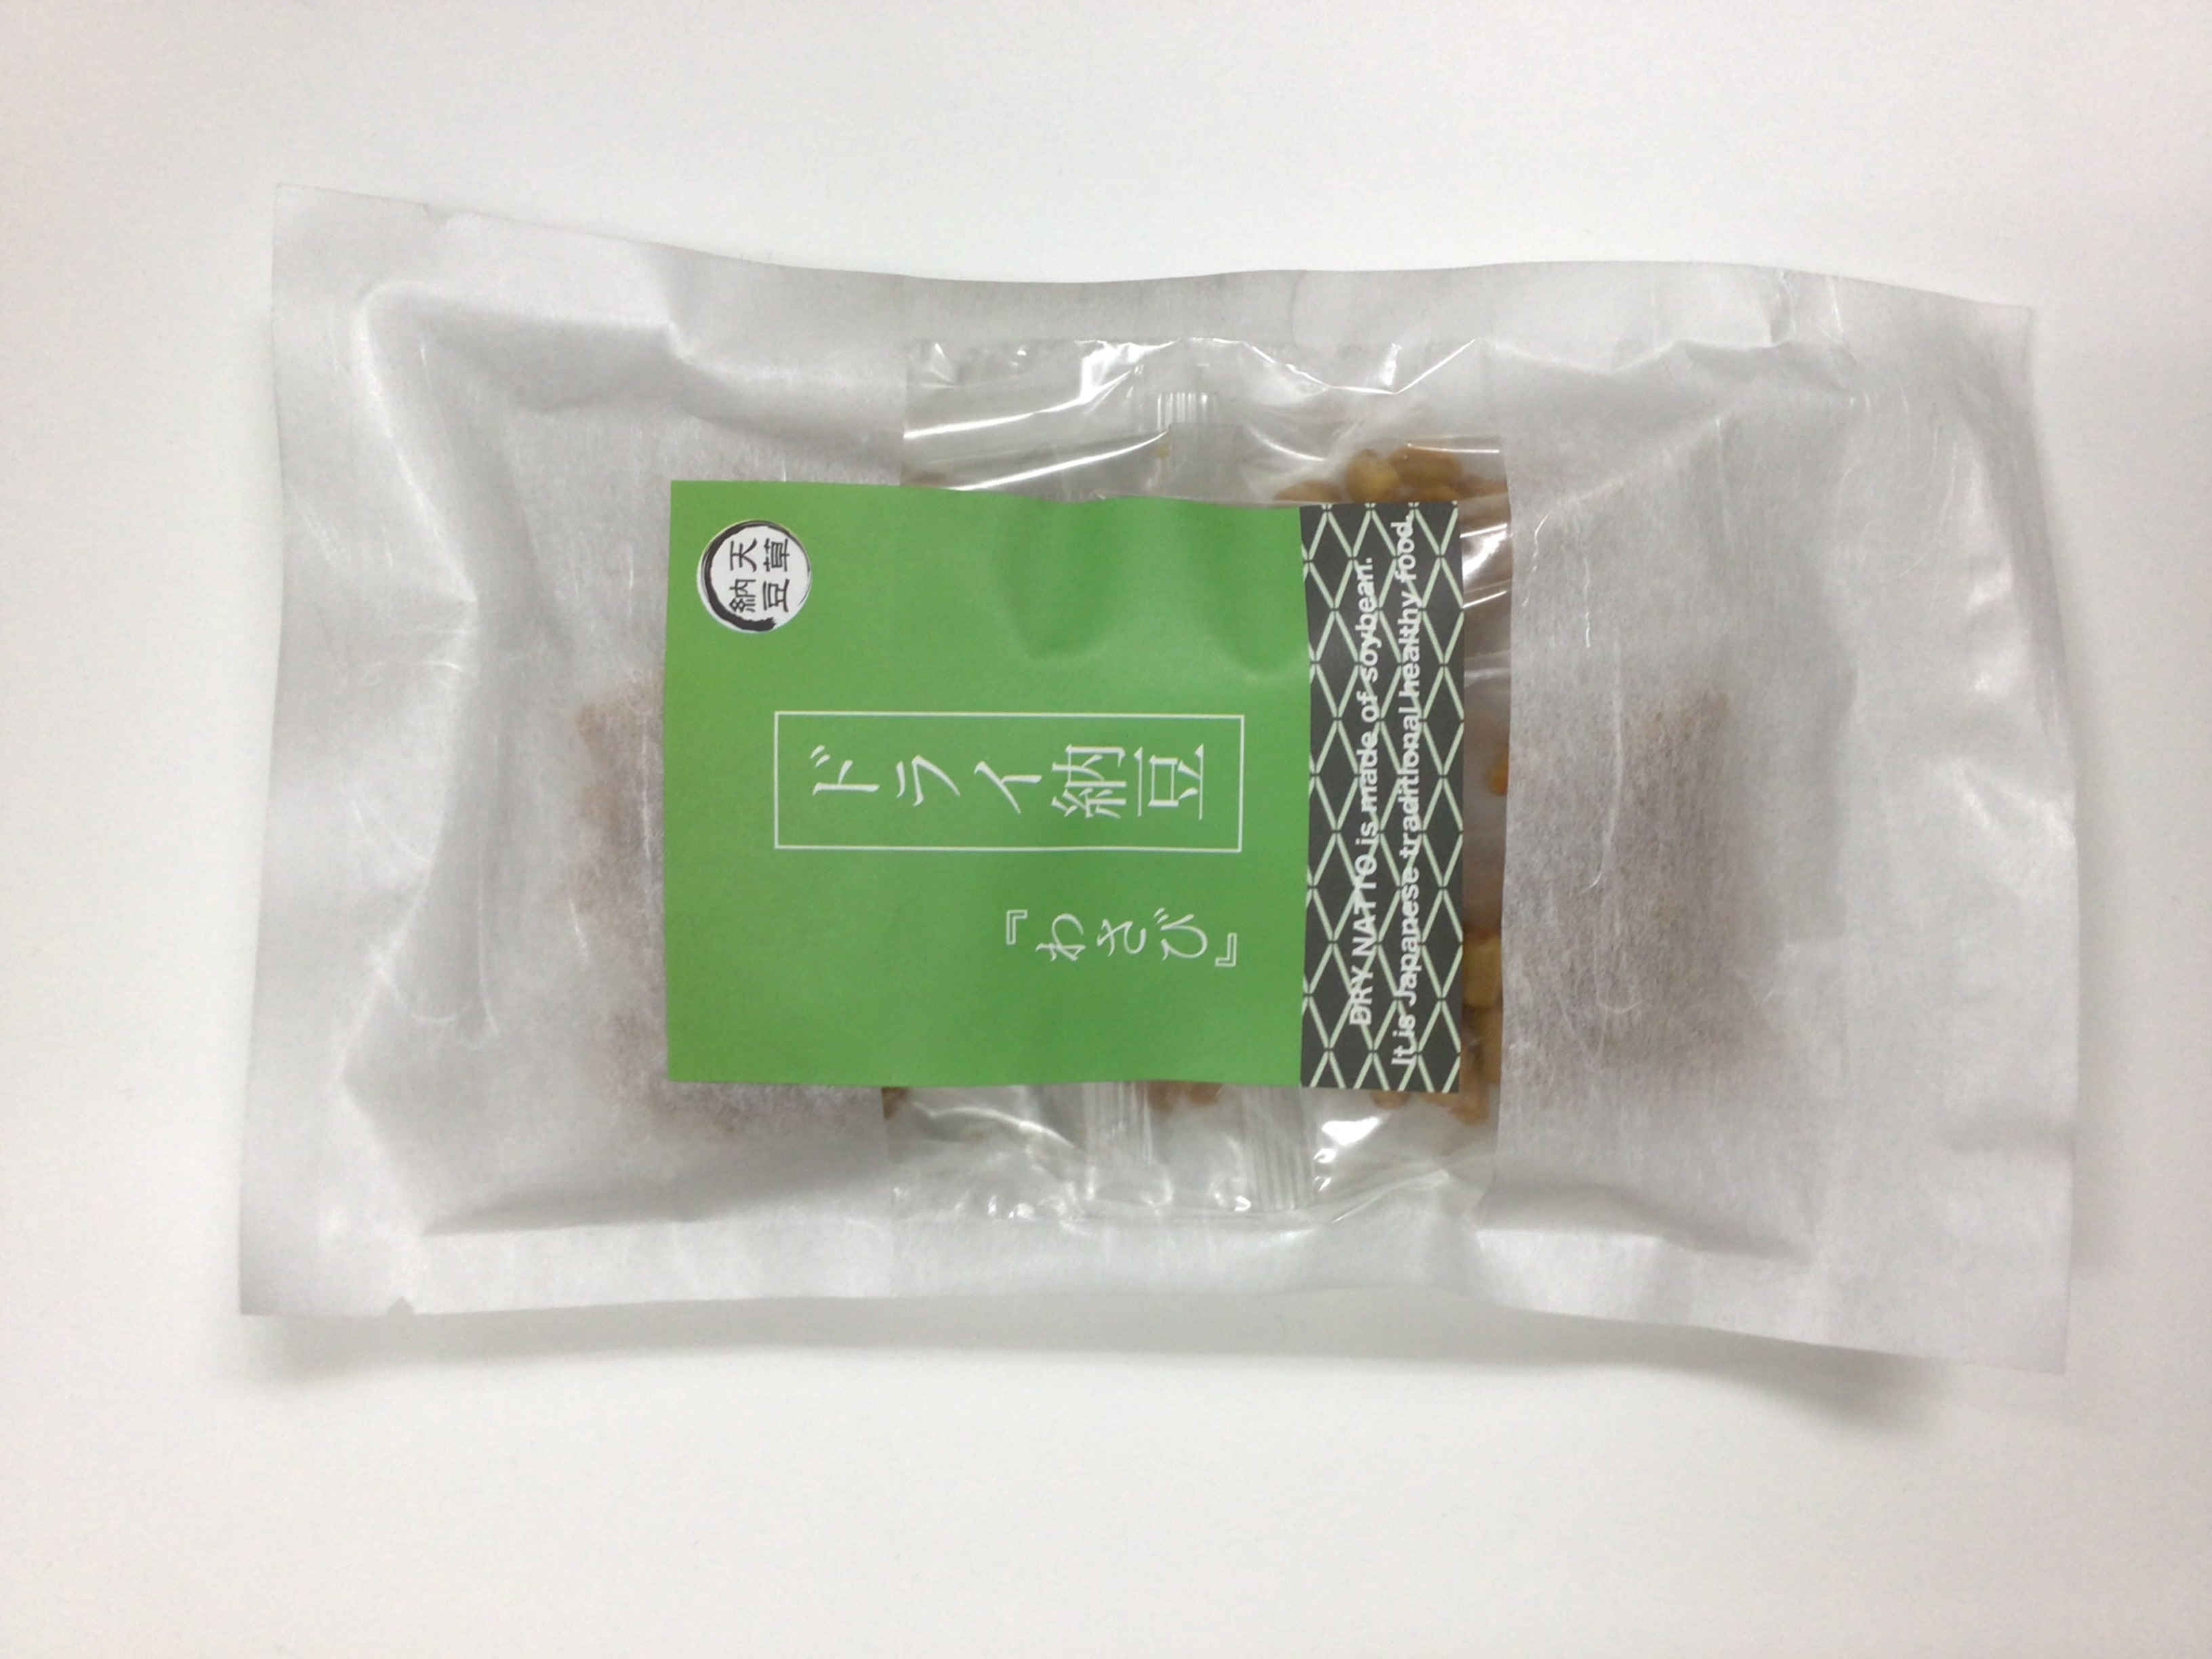 dry natto Watsubi 1 set contains 30 bags